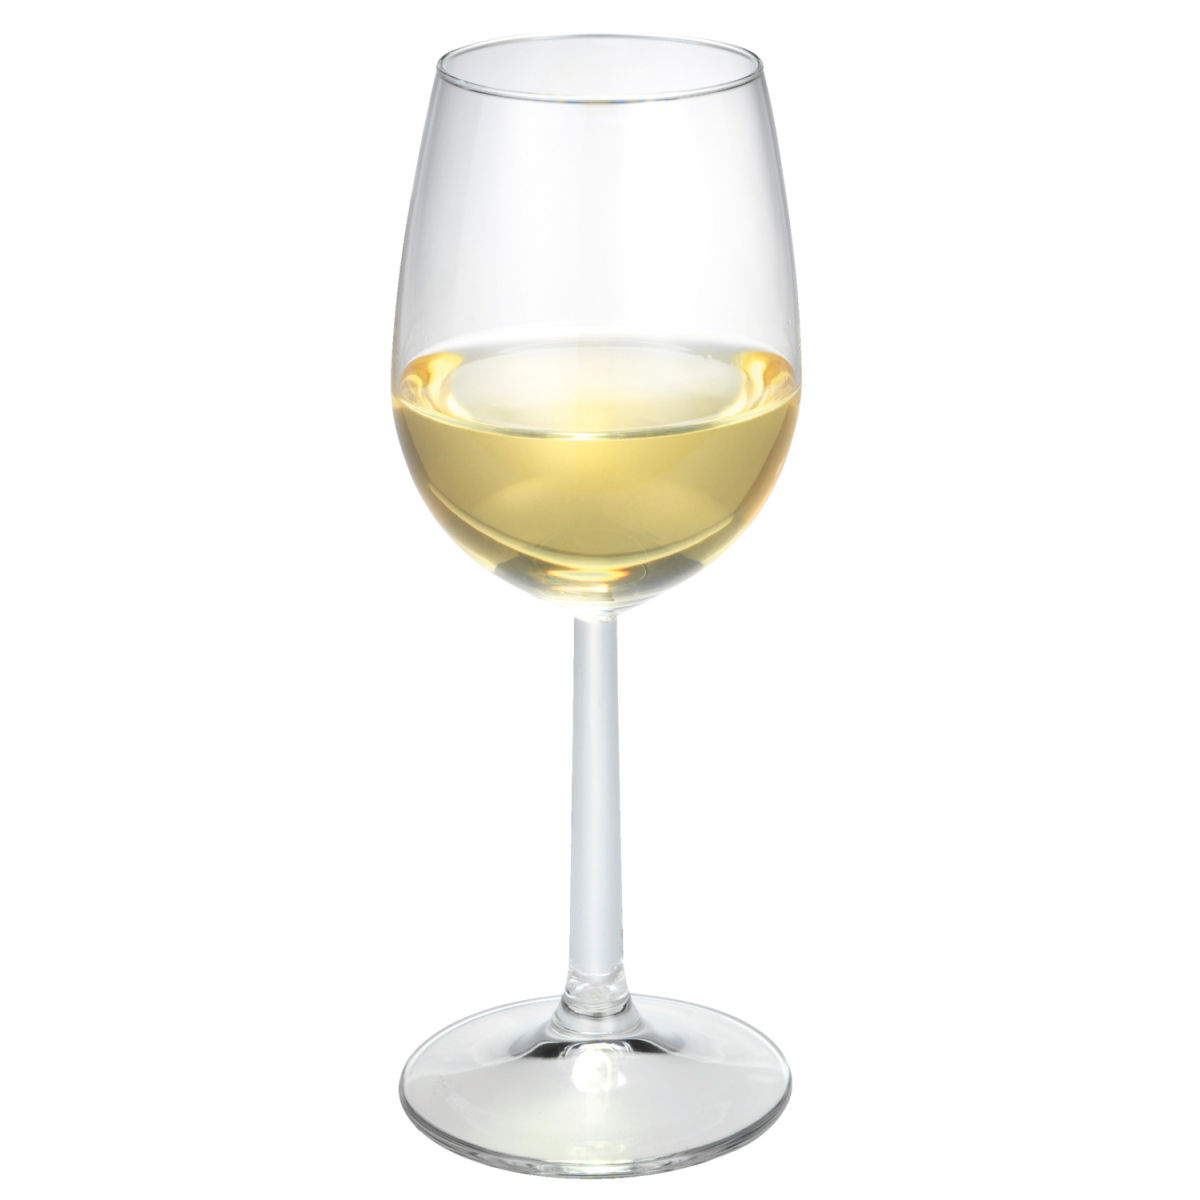 Royal leerdam Witte wijnglas Bouquet met vulstreepje; 350ml, 6x19.5 cm (ØxH); transparant; 0.1 l & 0.2 l vulstreepje, 6 stuk / verpakking